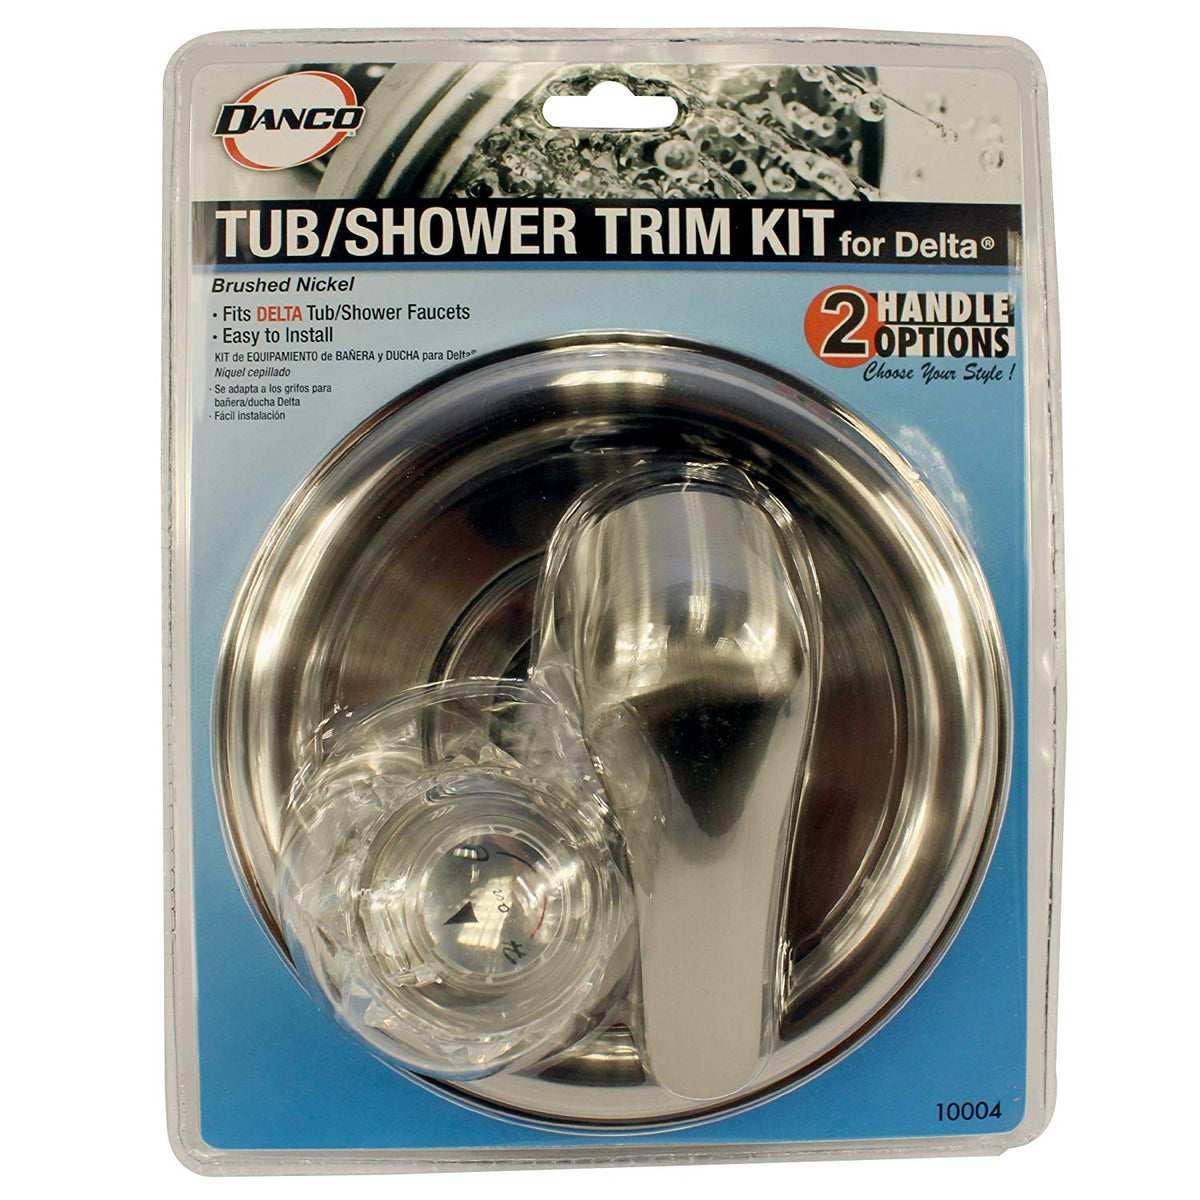 Danco 10004 Tub/Shower Trim Kit for Moen, Brushed Nickel